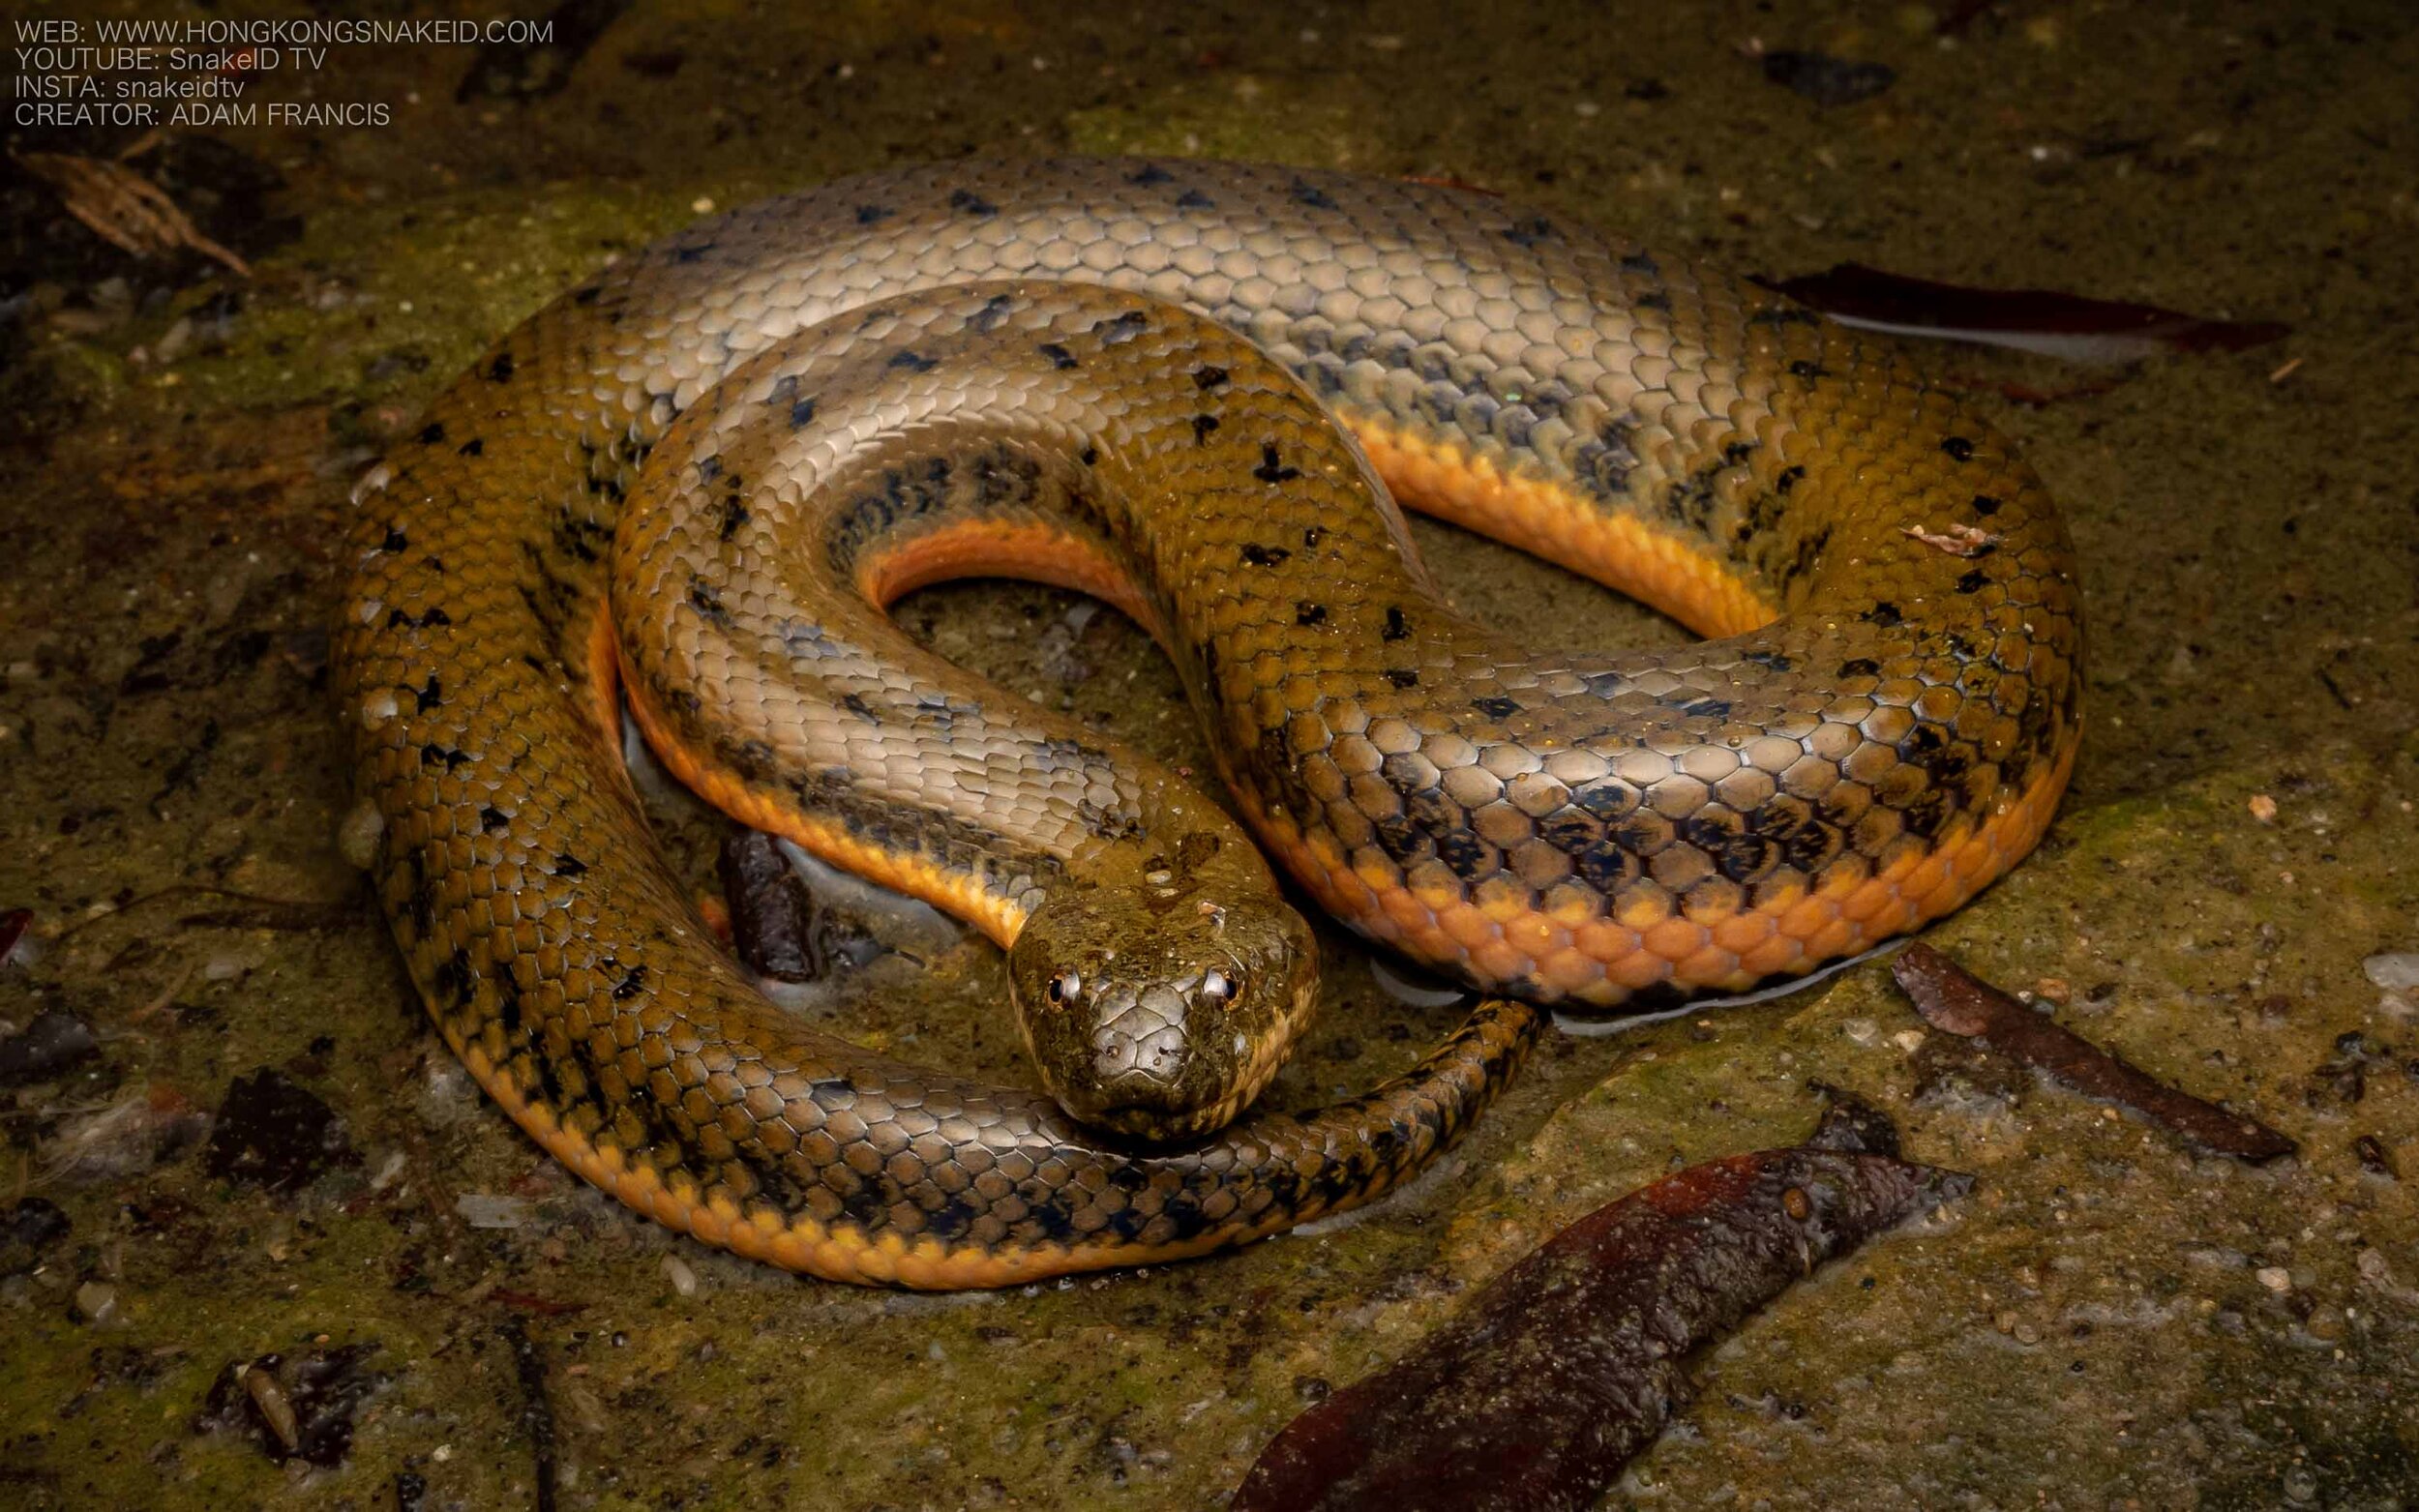 Chinese Water Snake - Myrrophis chinensis